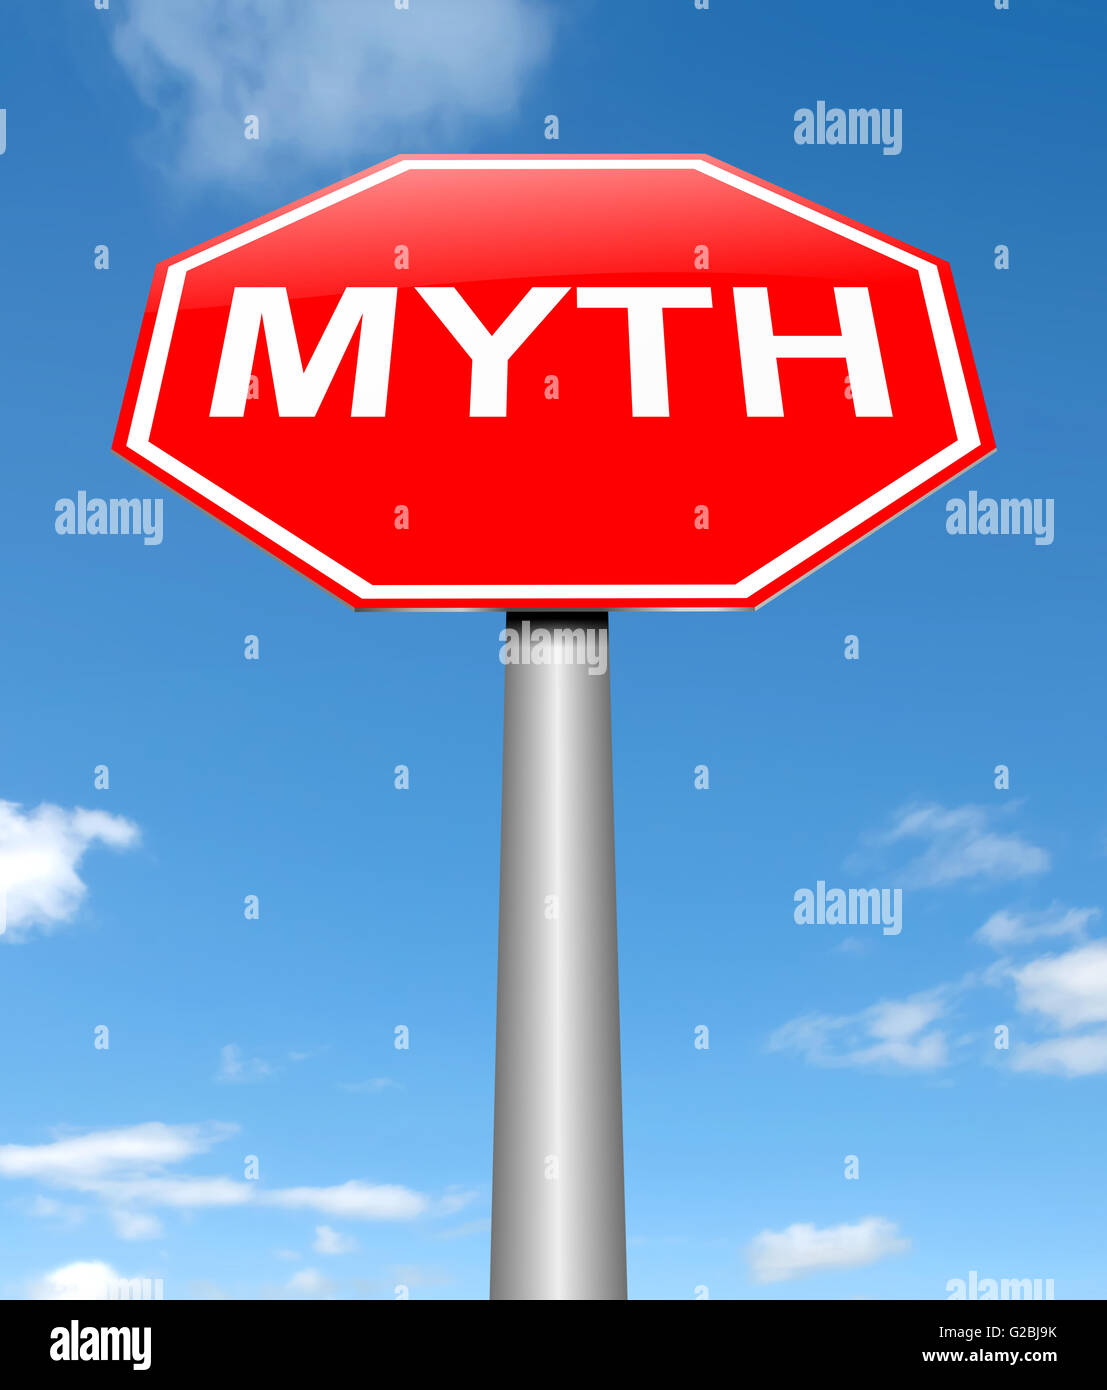 Myth concept. Stock Photo